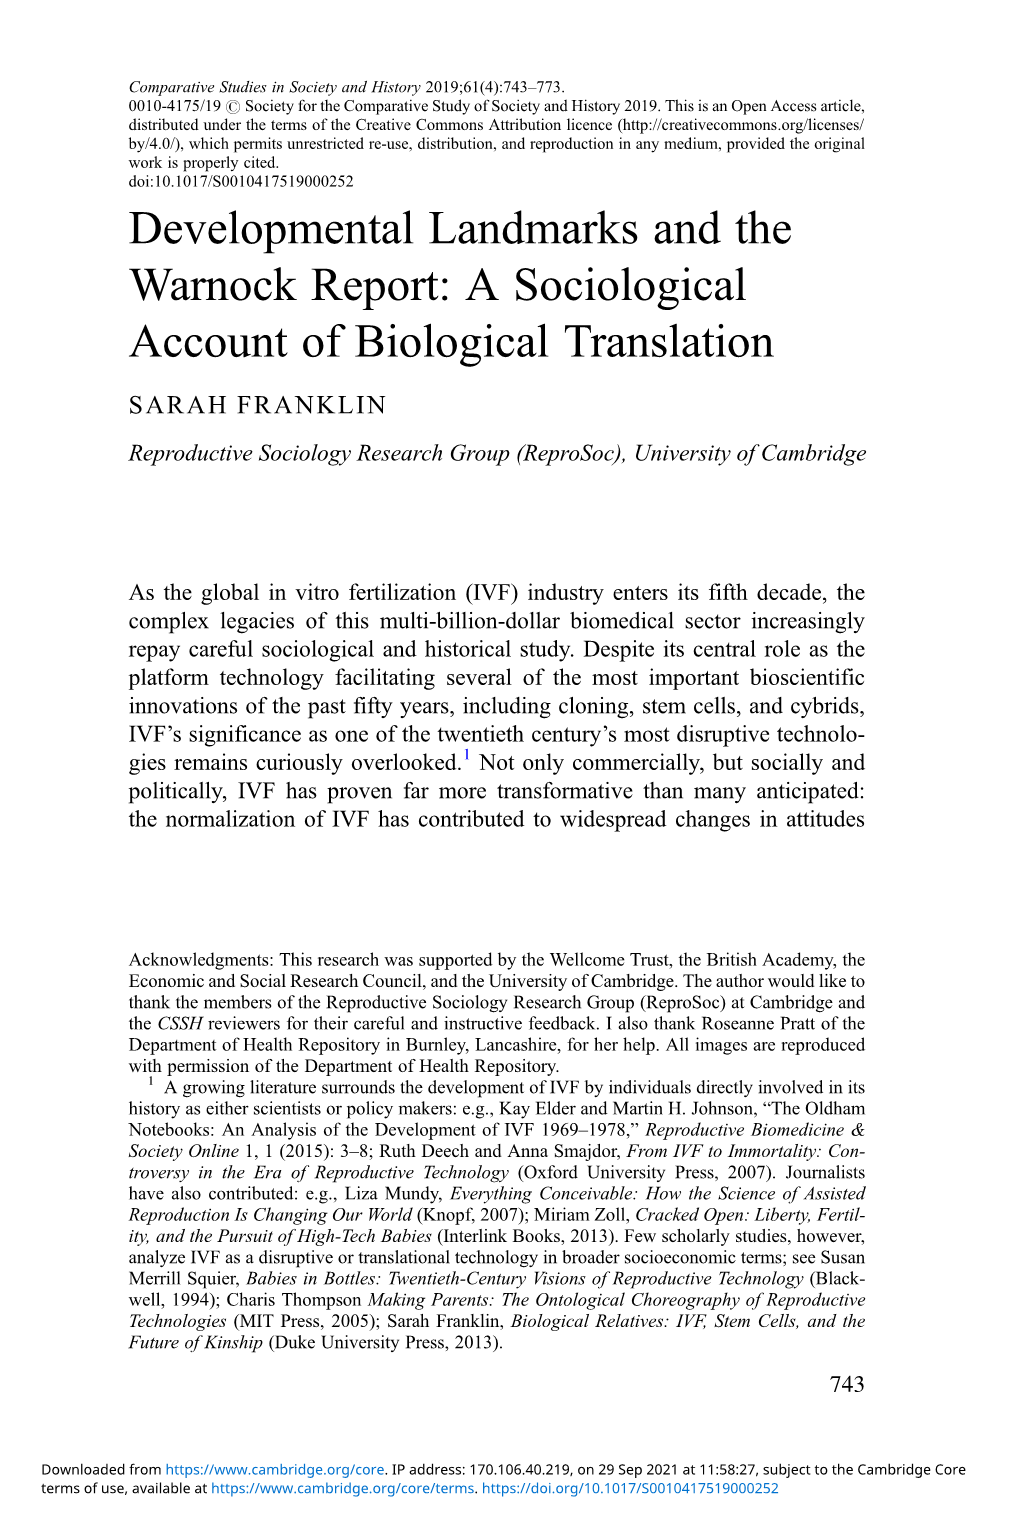 Developmental Landmarks and the Warnock Report: a Sociological Account of Biological Translation